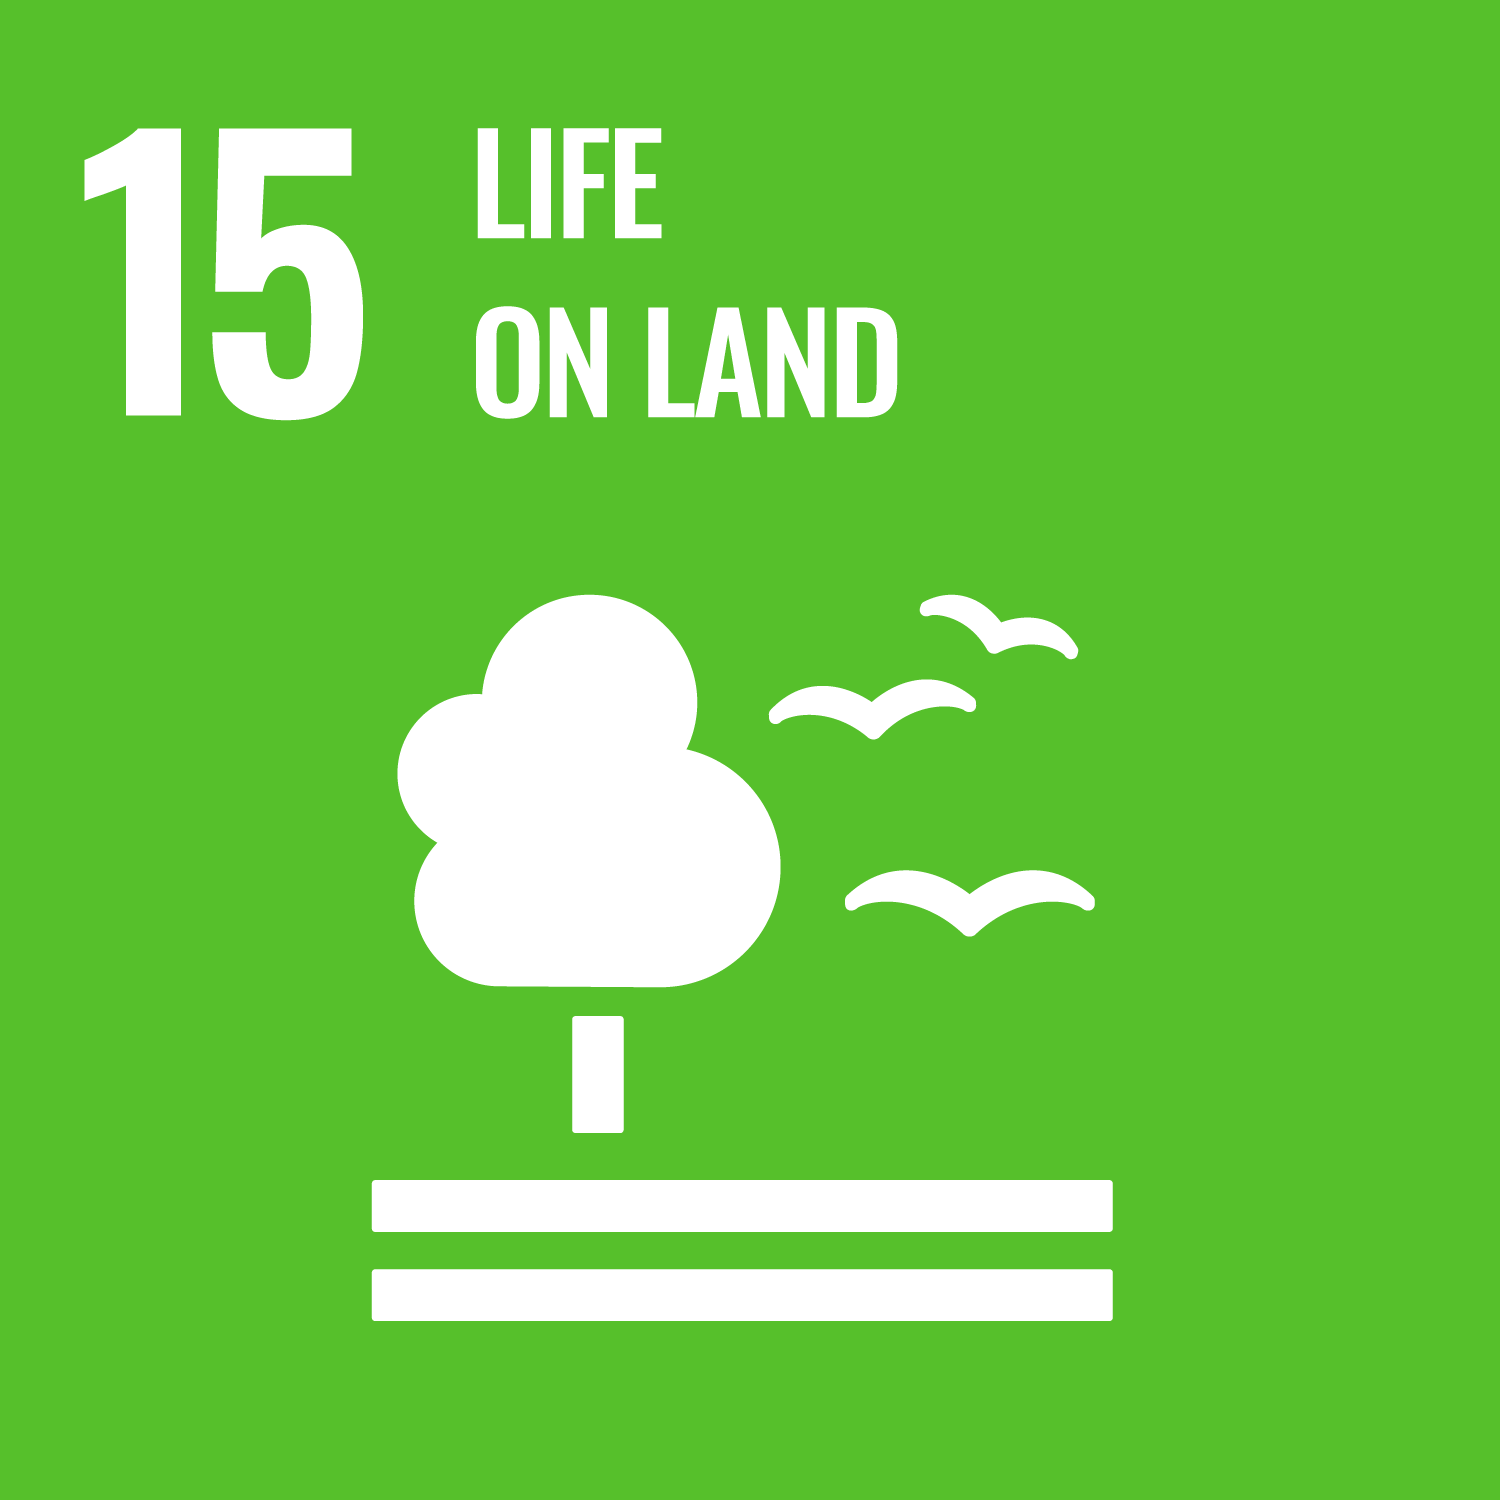 15 Life on Land (UN Goal)